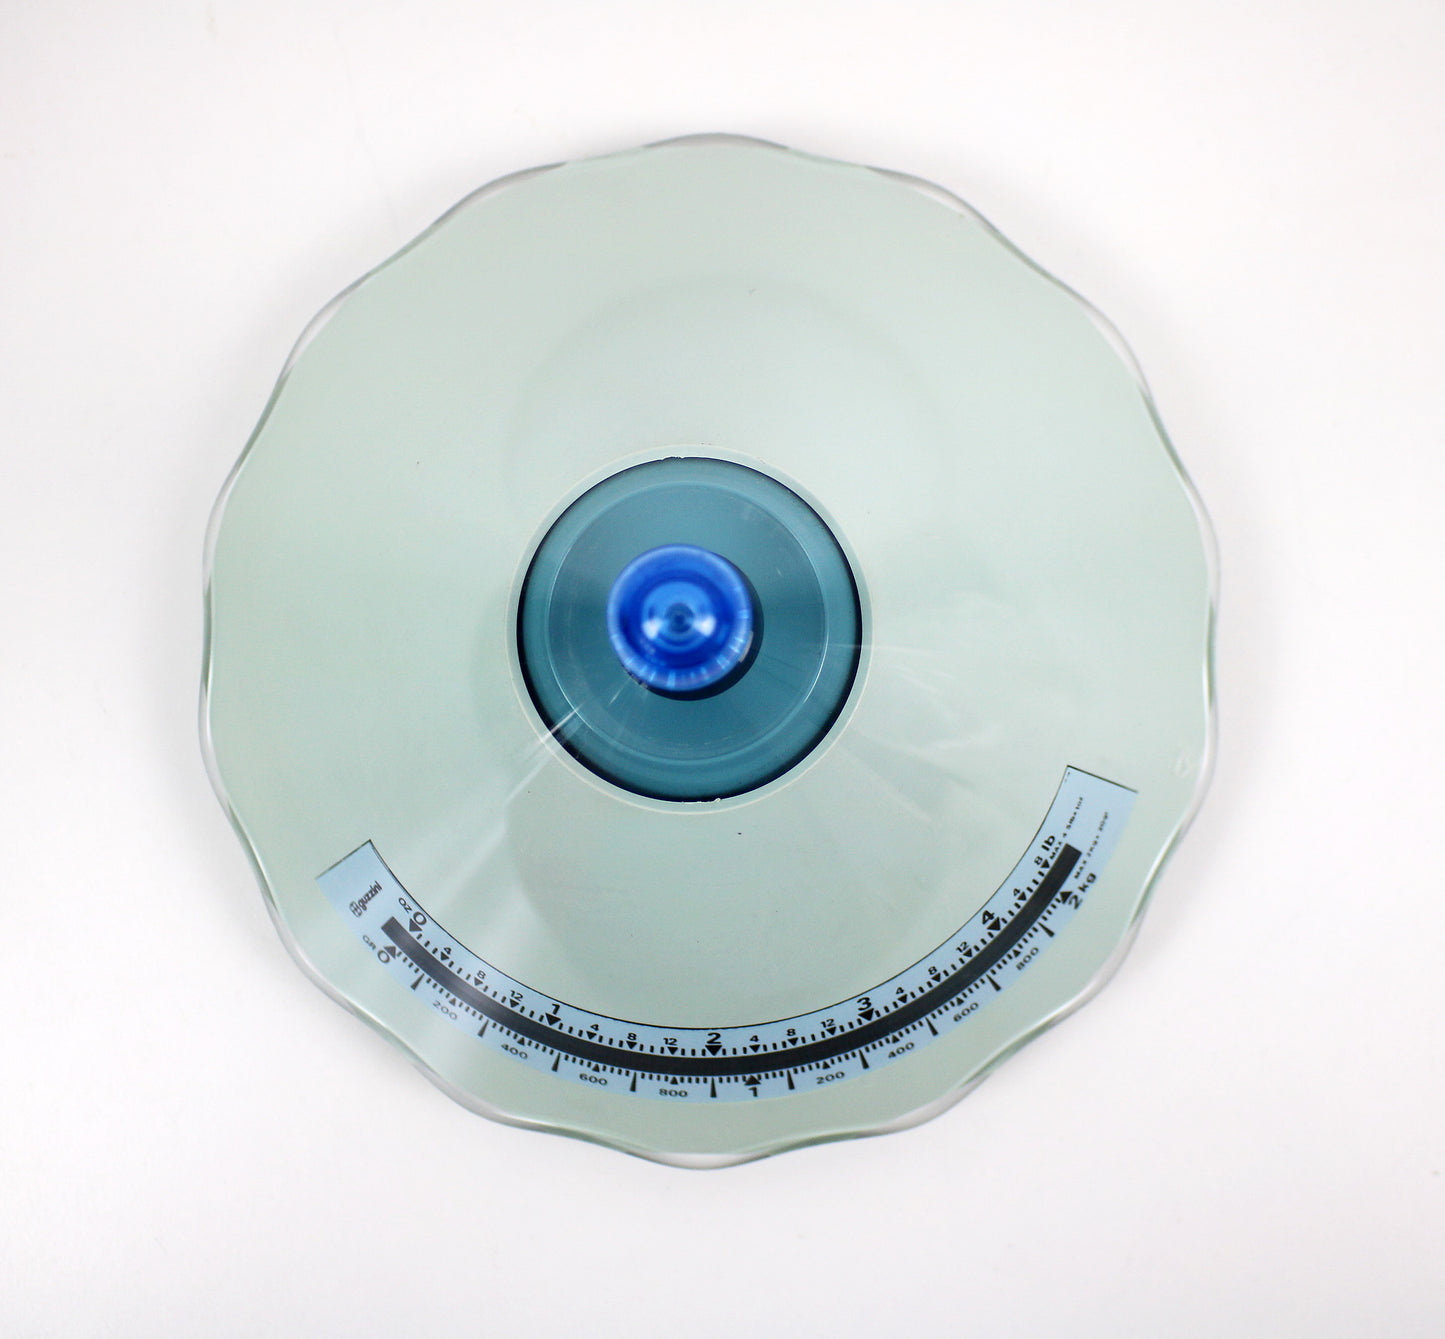 Ennio Pasini for Guzzini postmodern Dolly kitchen scales in pale blue acrylic